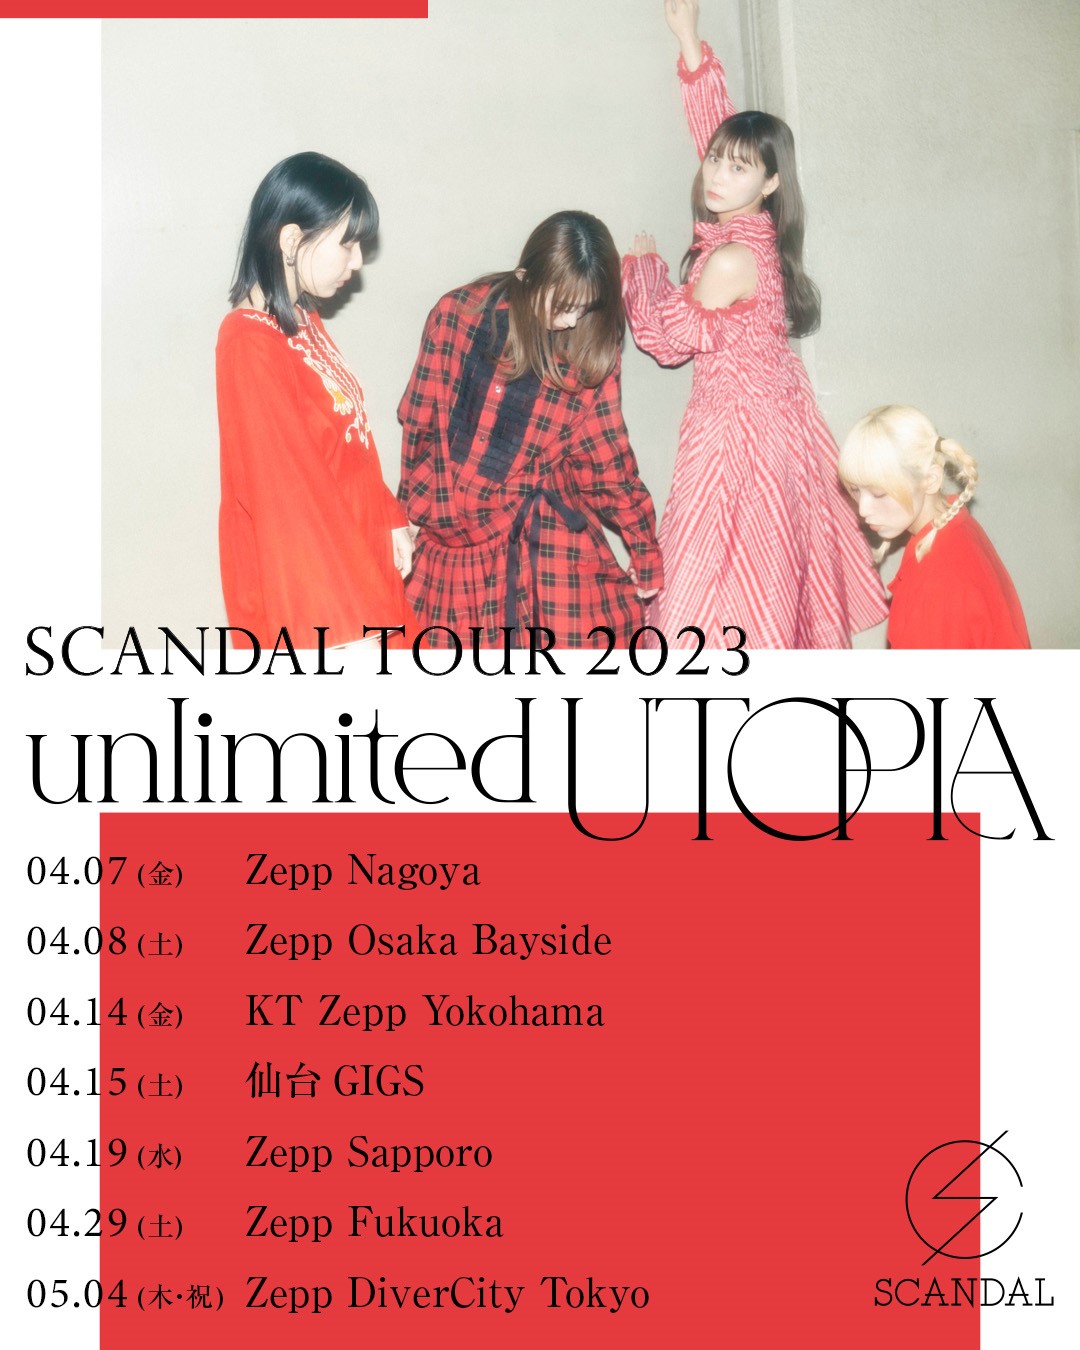 sc-tour-2023-unlimited-utopia_visual-2